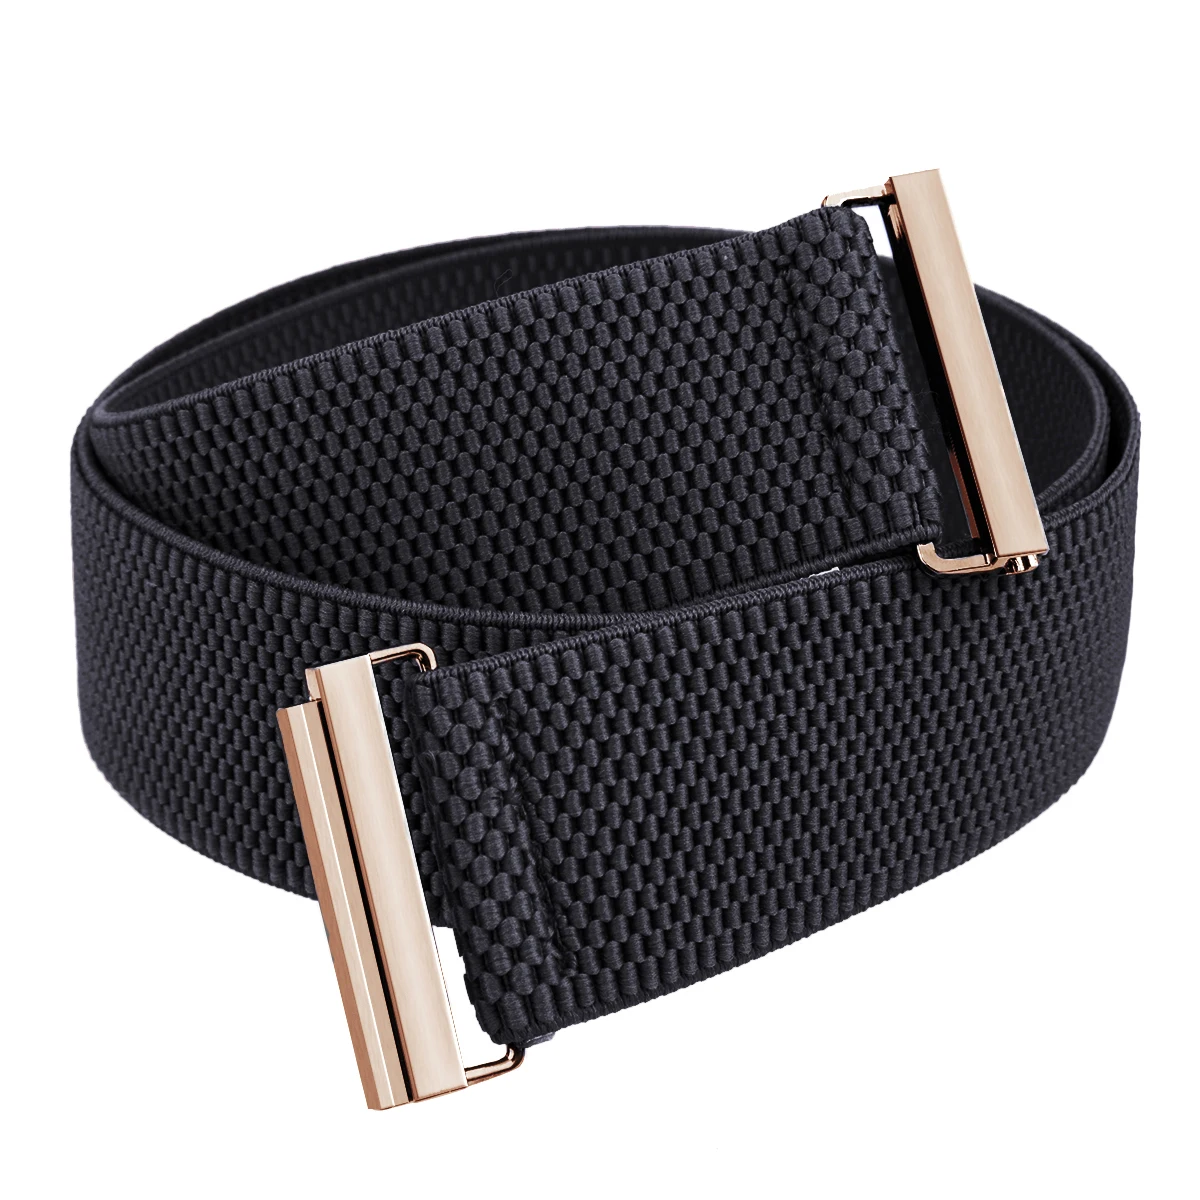 New Unisex Elastic Belt Golden Alloy Quick Unlock Release Buckle Tough Stretch Nylon Women Belt For Jeans Adjustable Waist Belt